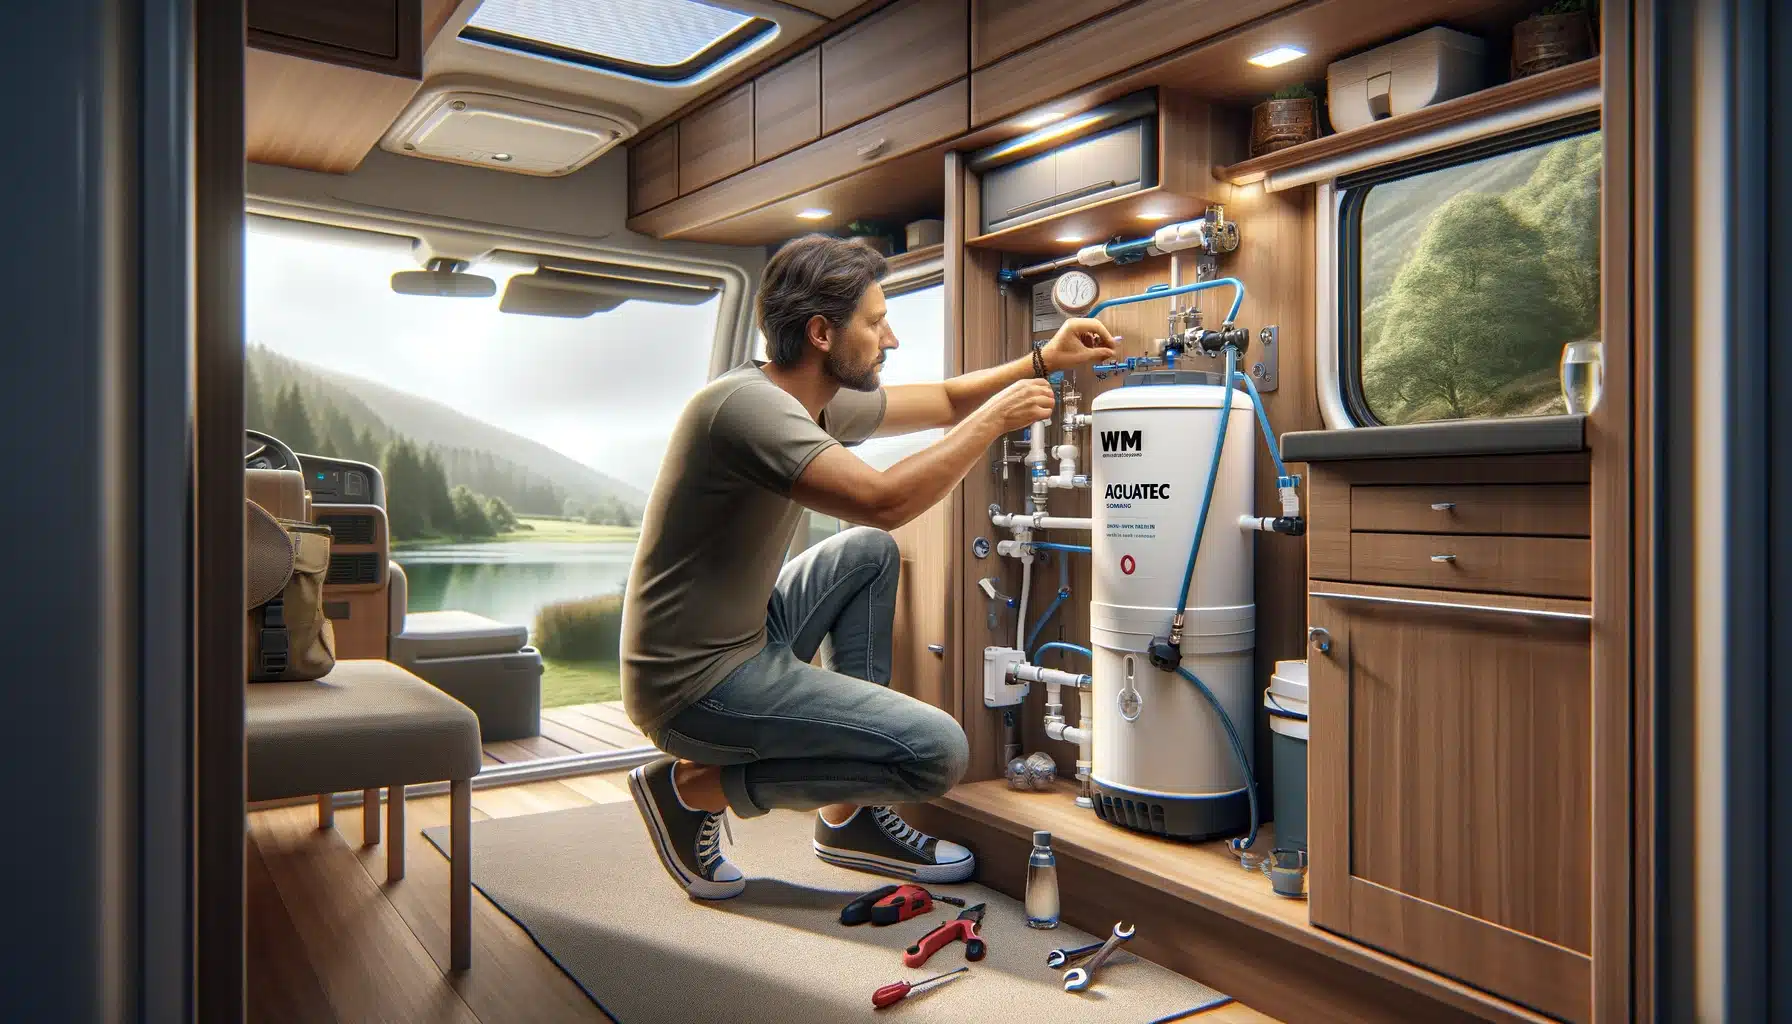 Image d'un homme installant un système de filtration aquatec